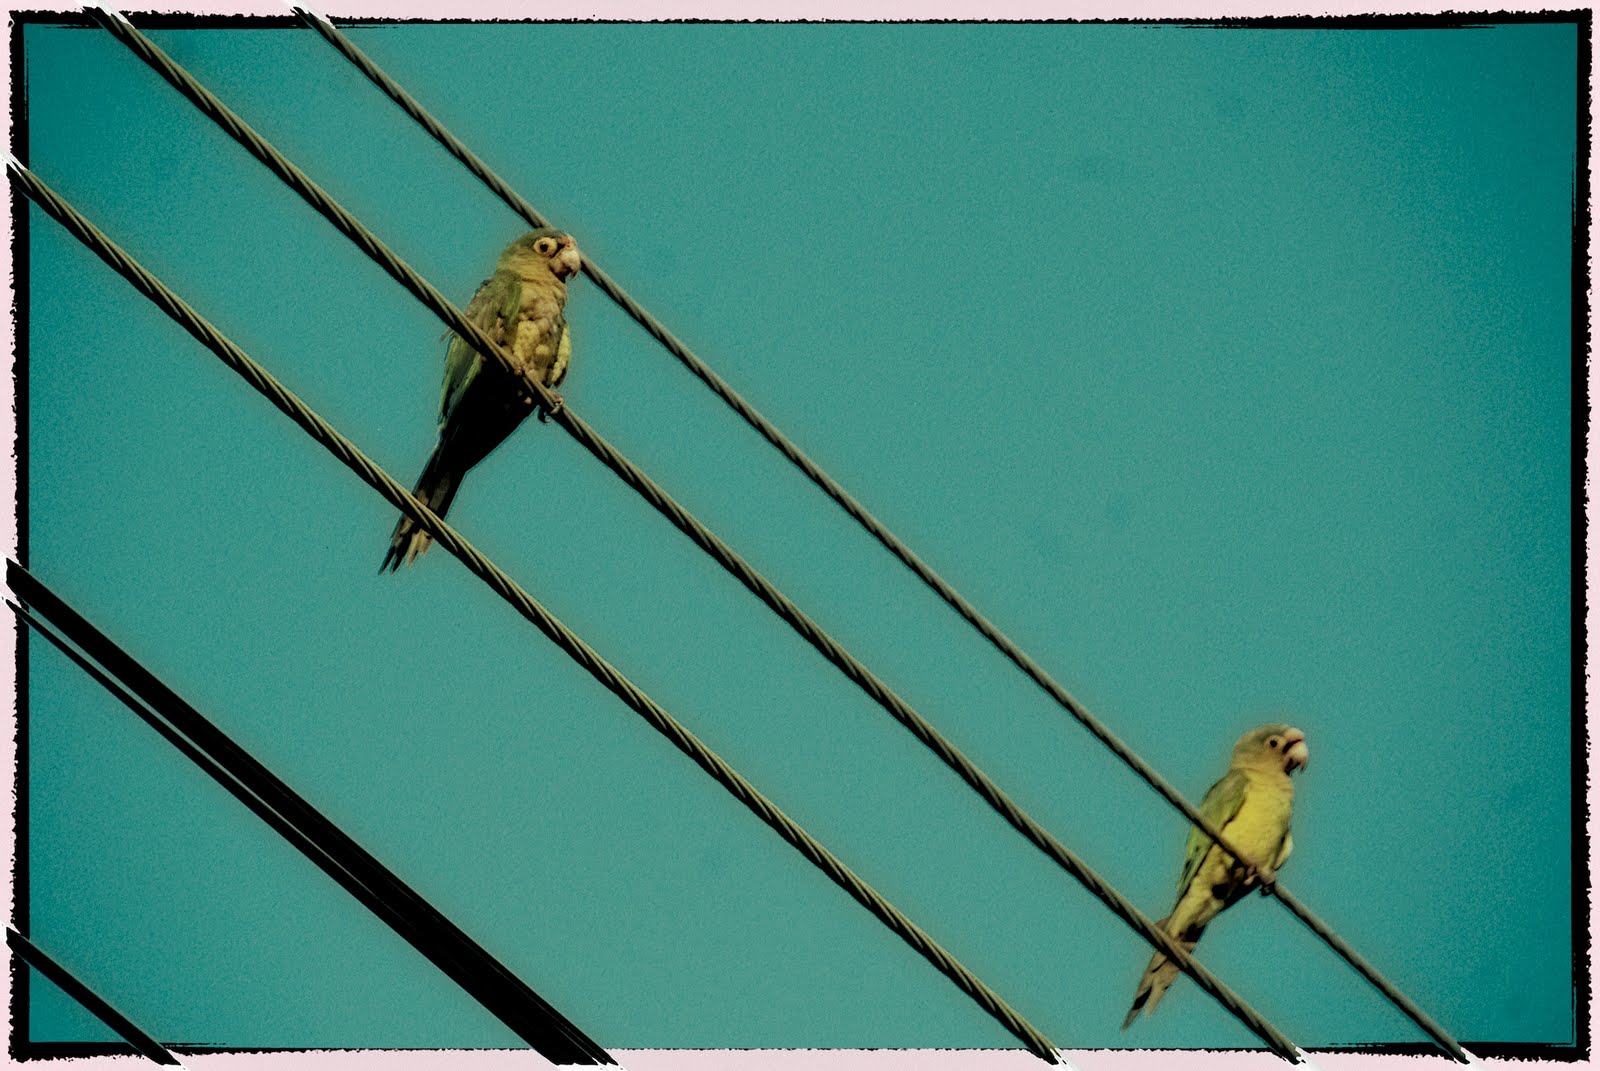 Parrots in Corozalito